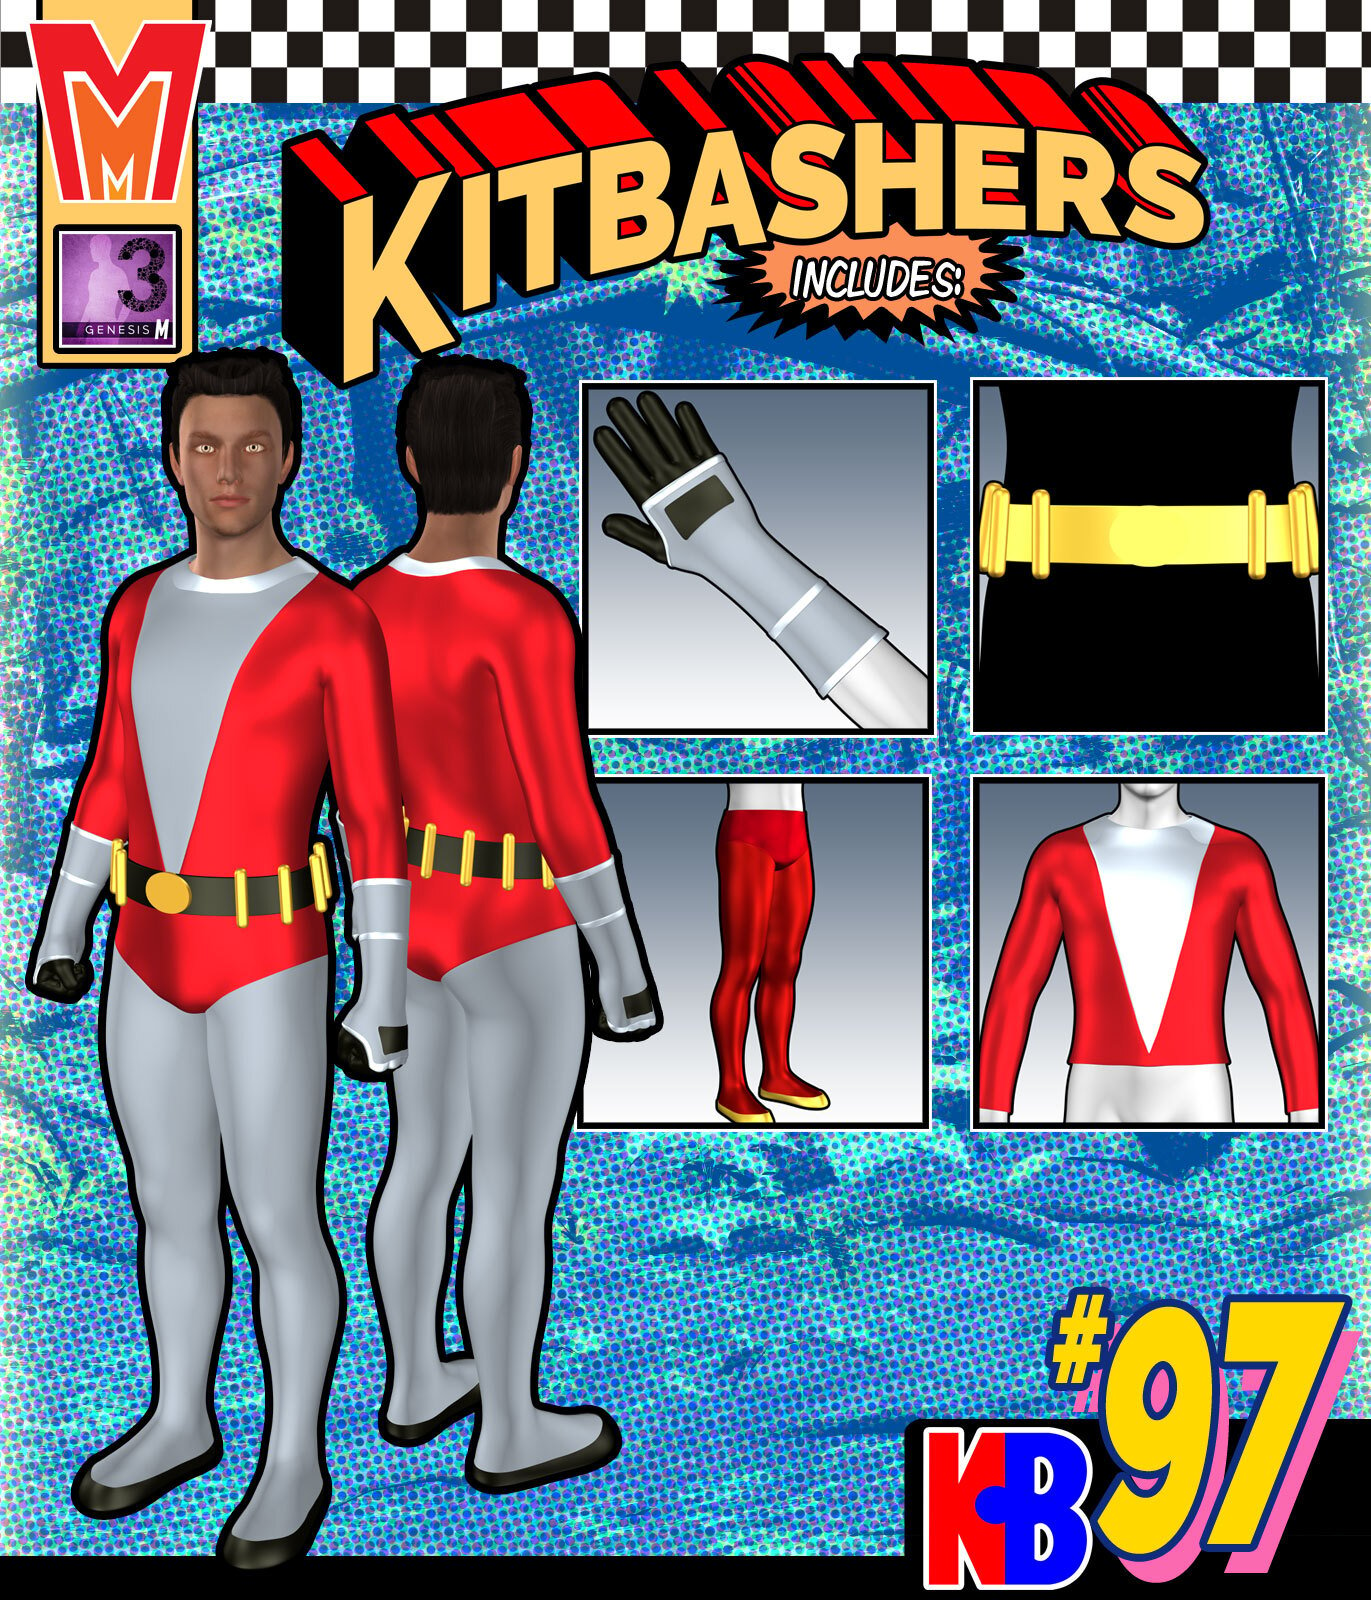 Kitbashers 097 MMG3M by: MightyMite, 3D Models by Daz 3D